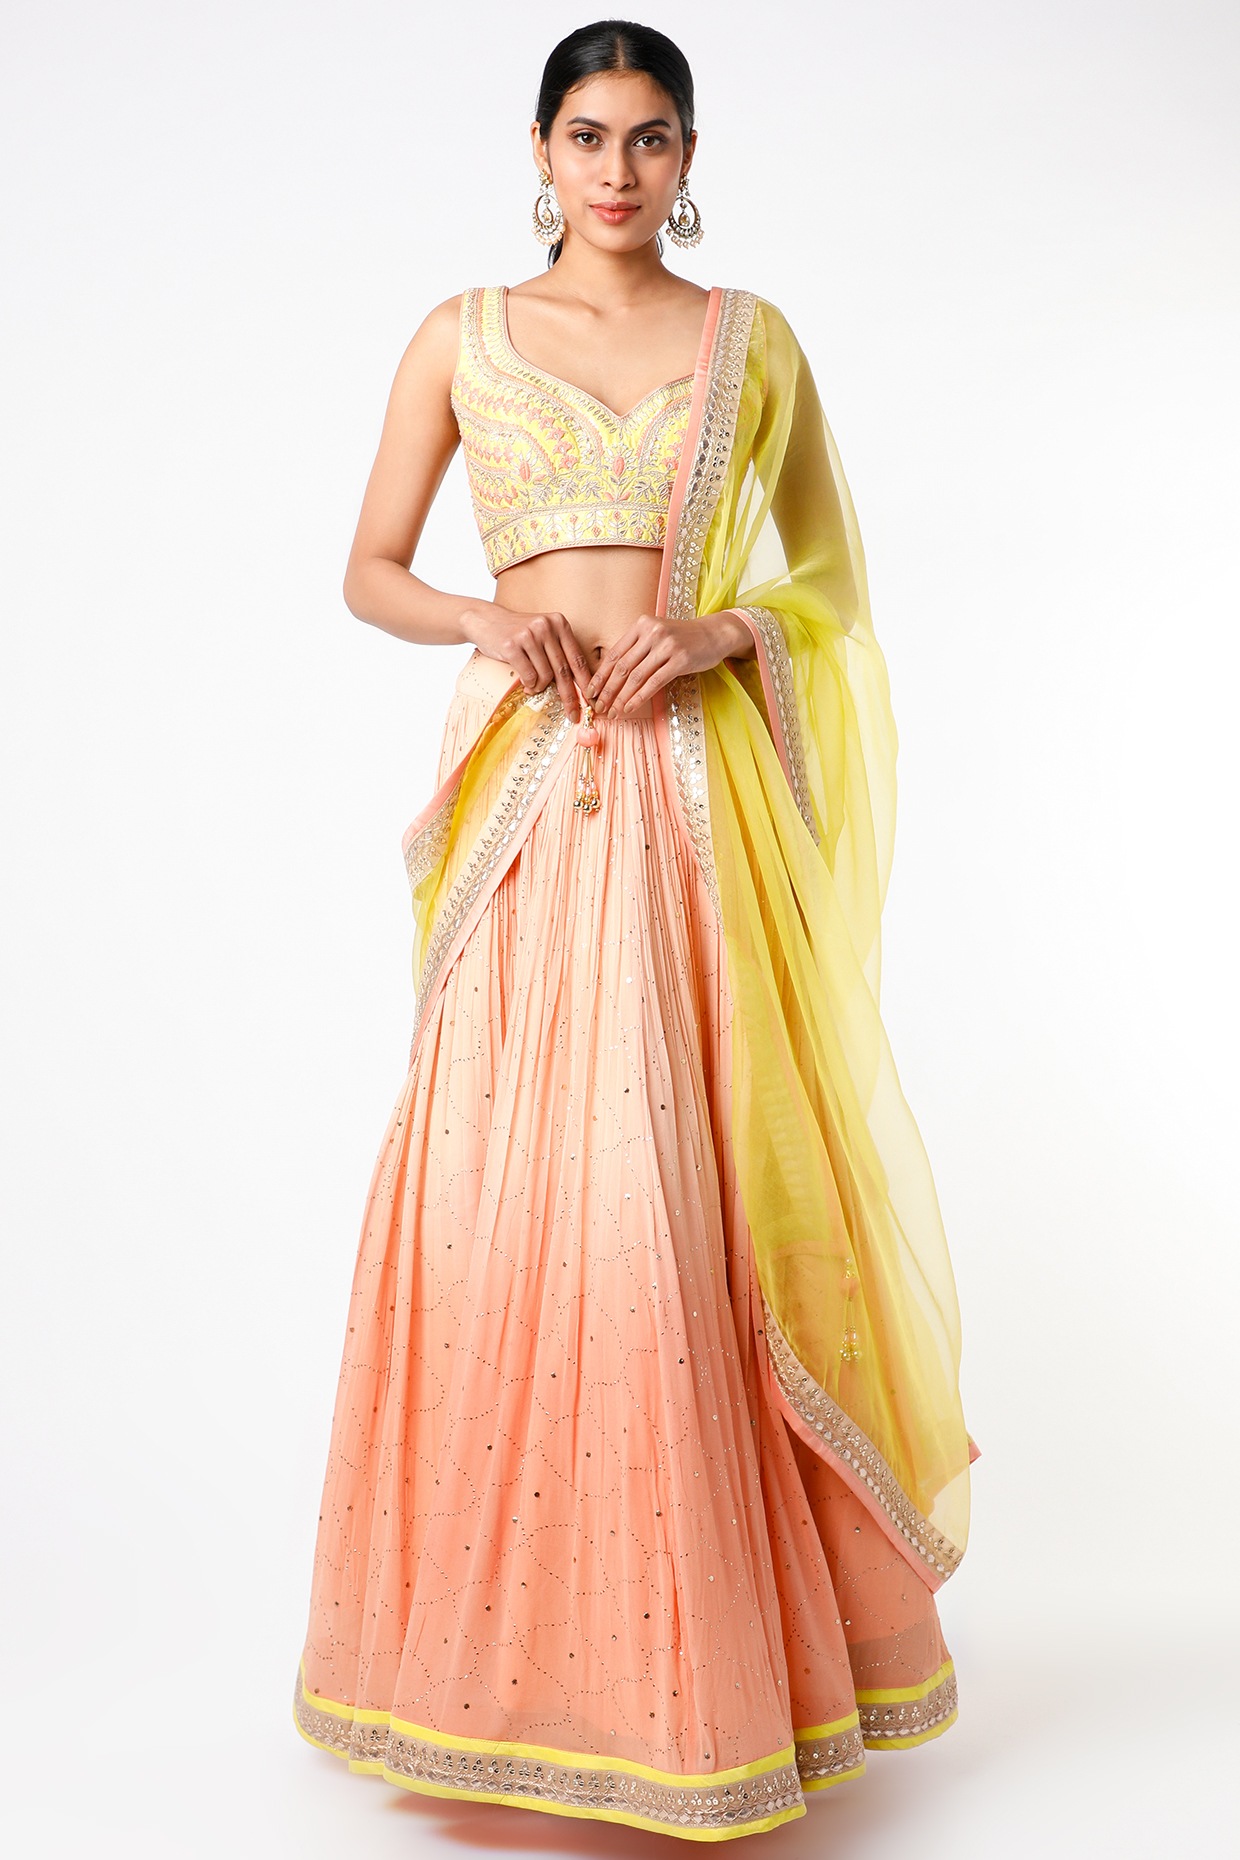 Traditional chaniya choli | Designer saree blouse patterns, Choli designs,  Lehnga designs